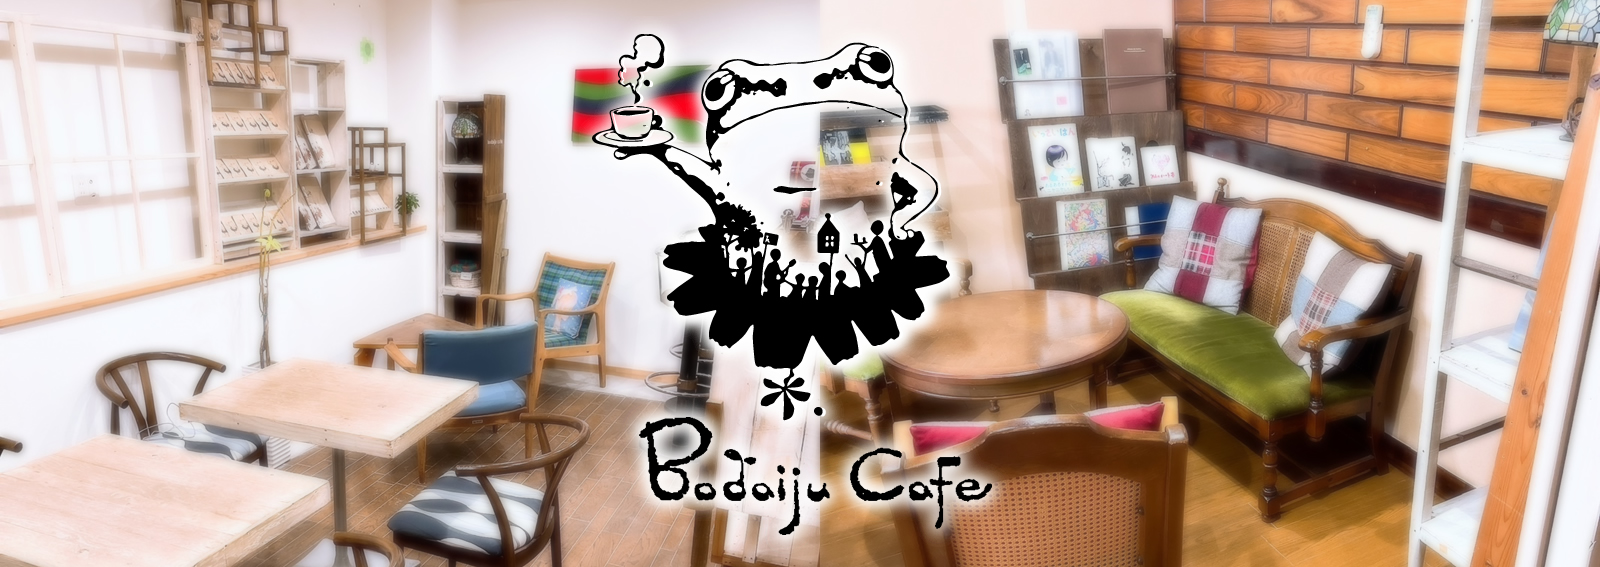 Bodaiju Cafe - 大阪 平野区のエンターテイメントカフェ-ボダイジュカフェ